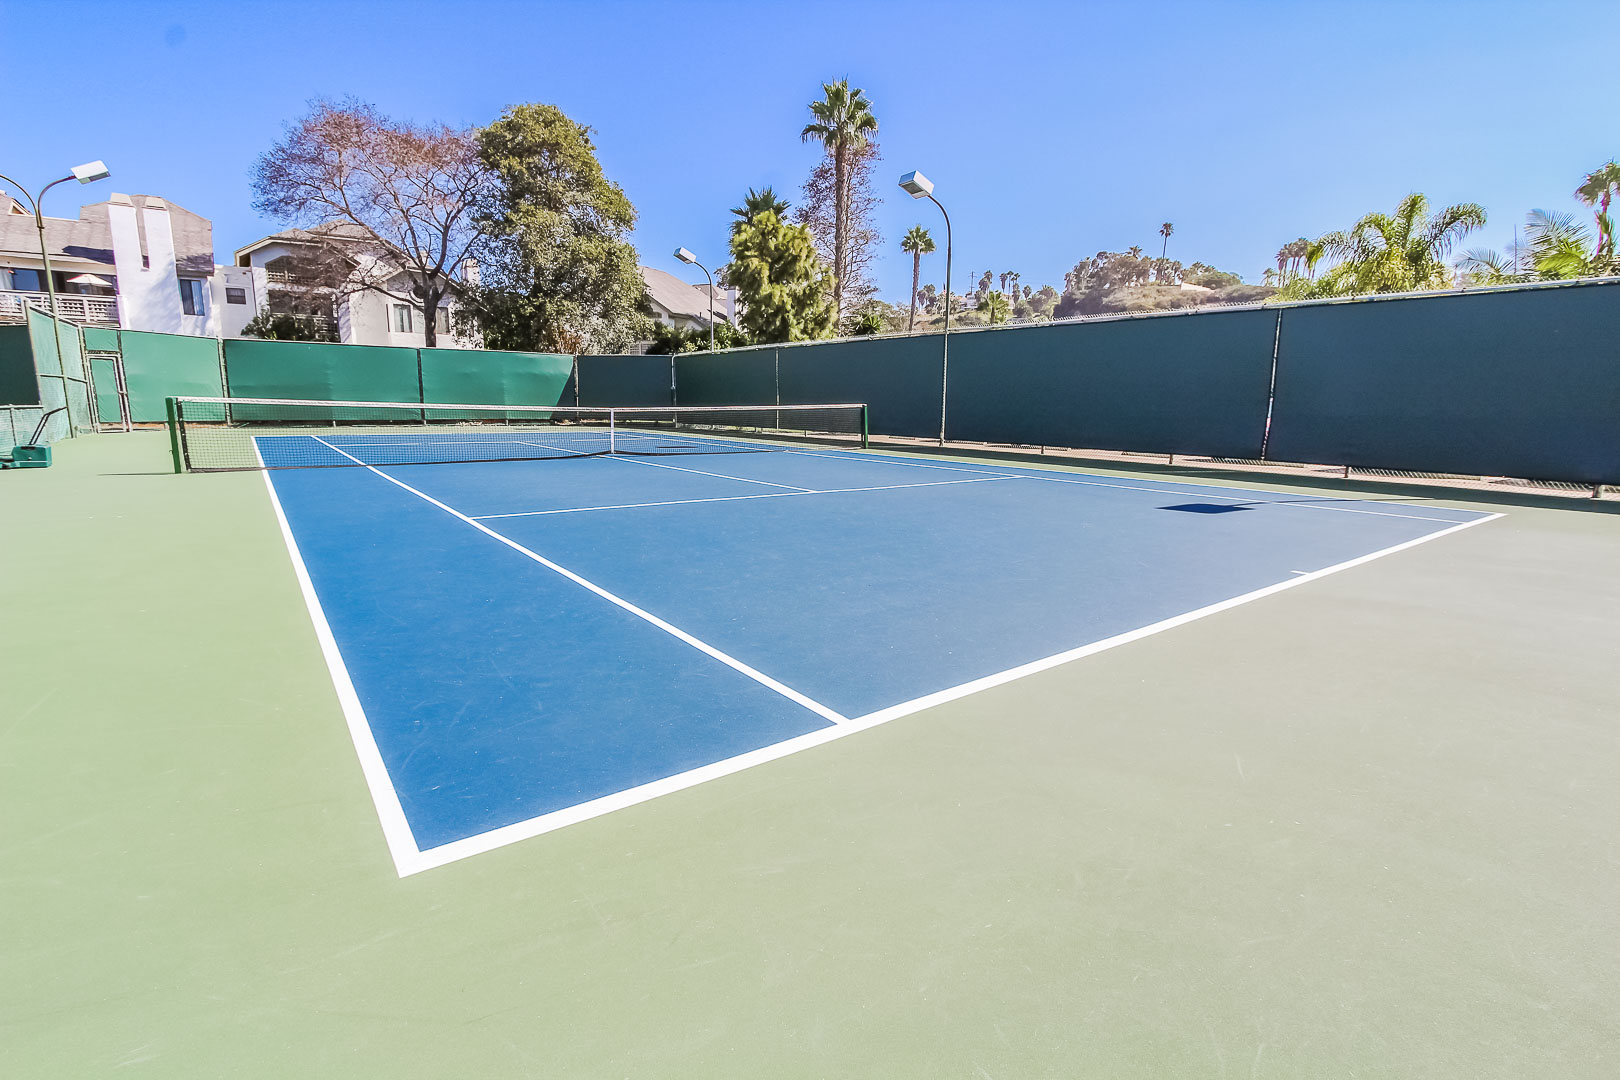 A vibrant tennis court at VRI's Winner Circle Resort in California.